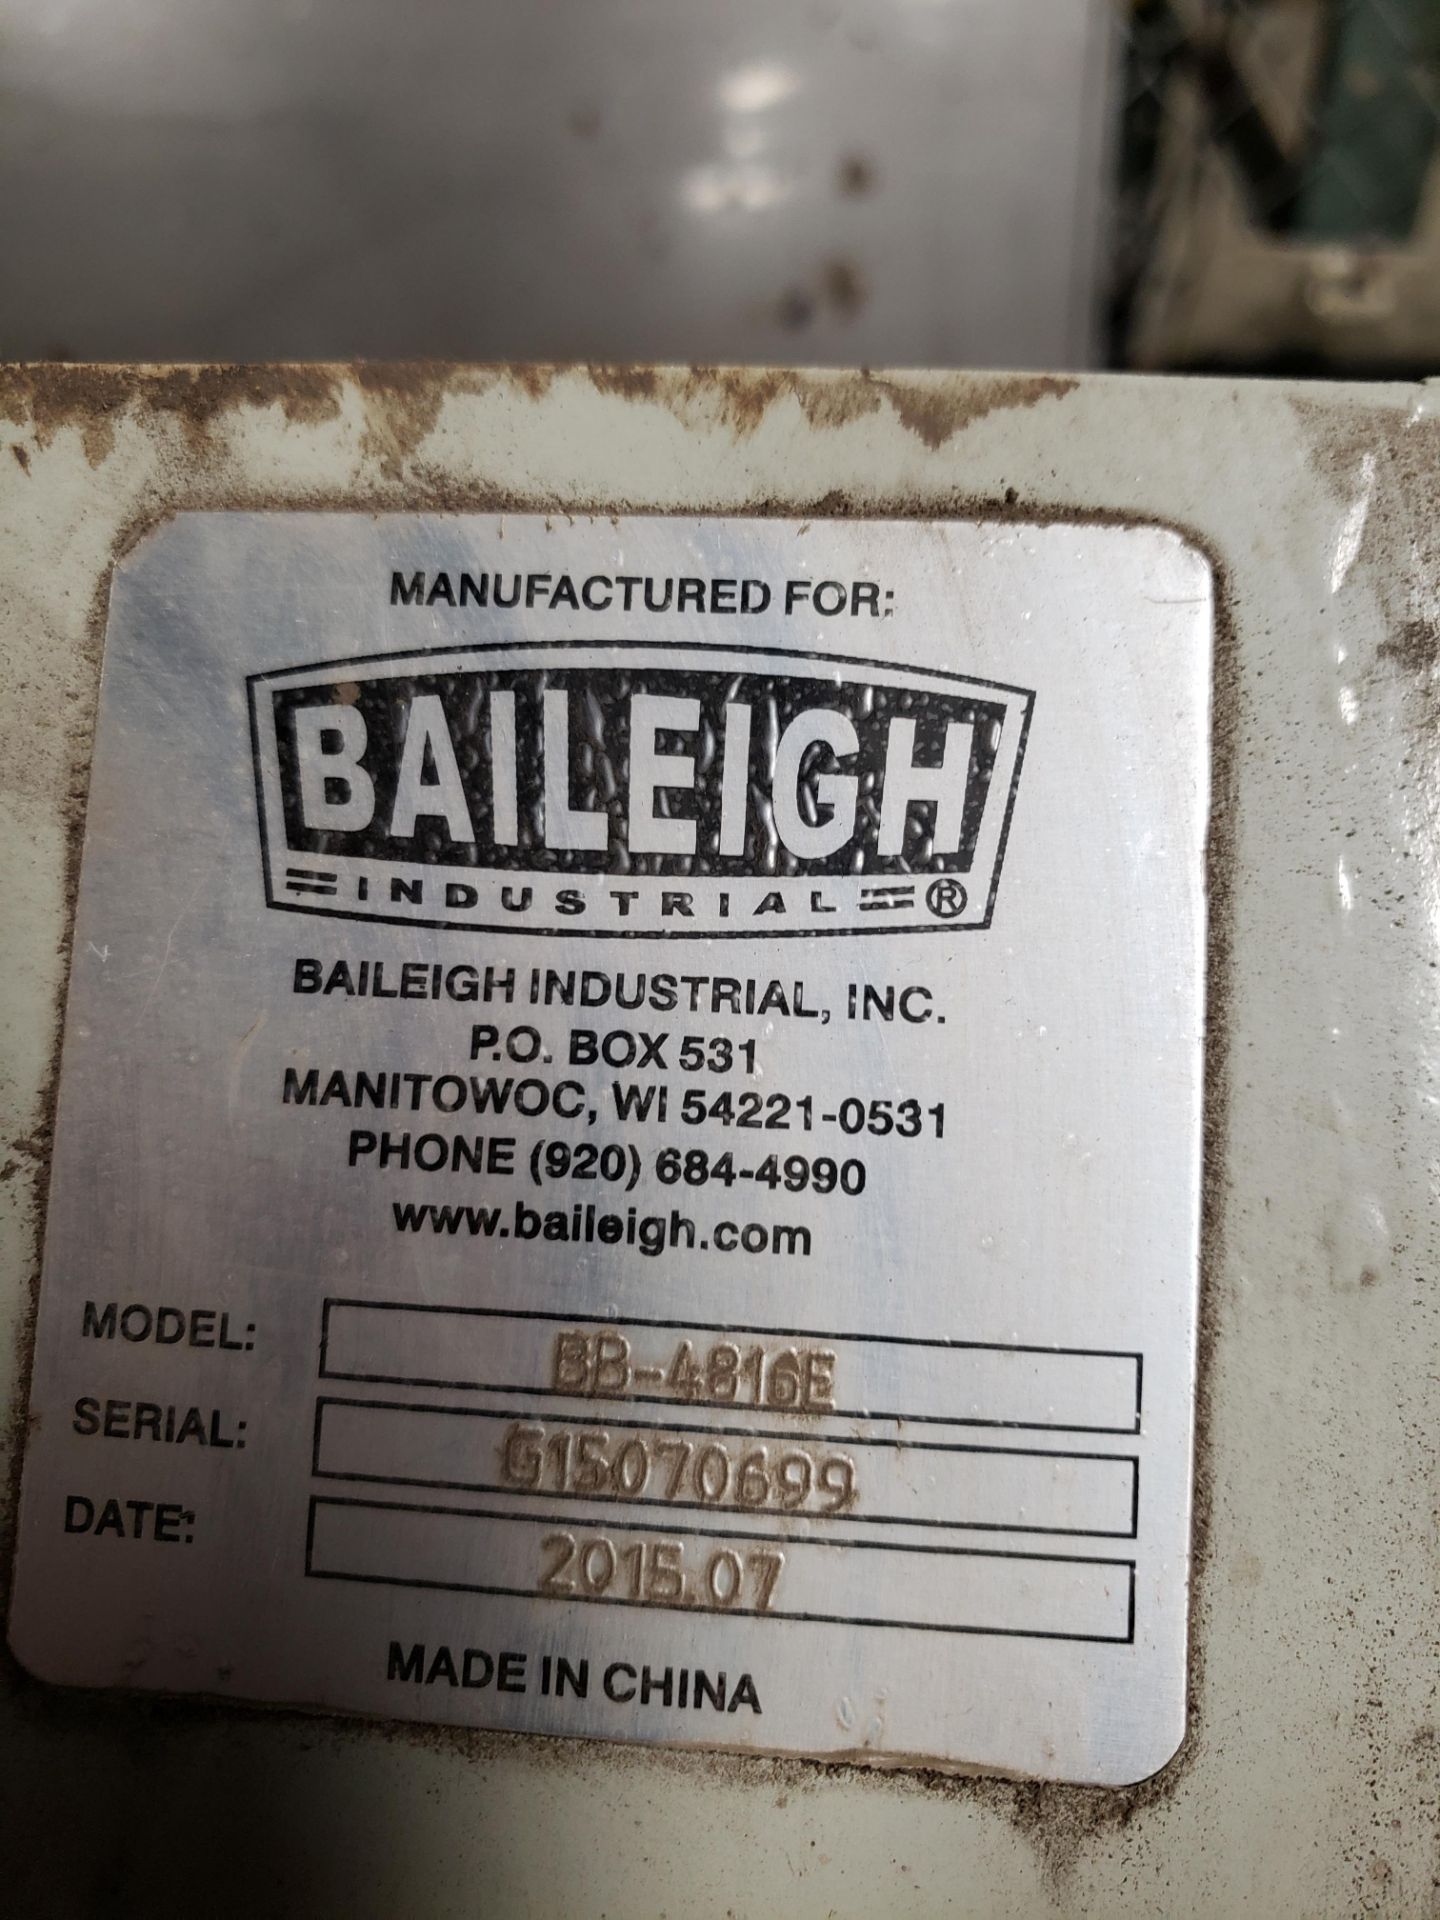 Baileigh 48" Box & Pan Sheet Metal Brake, M# BB-4816E, S/N G15070699 | Rig Fee $125 - Image 2 of 2